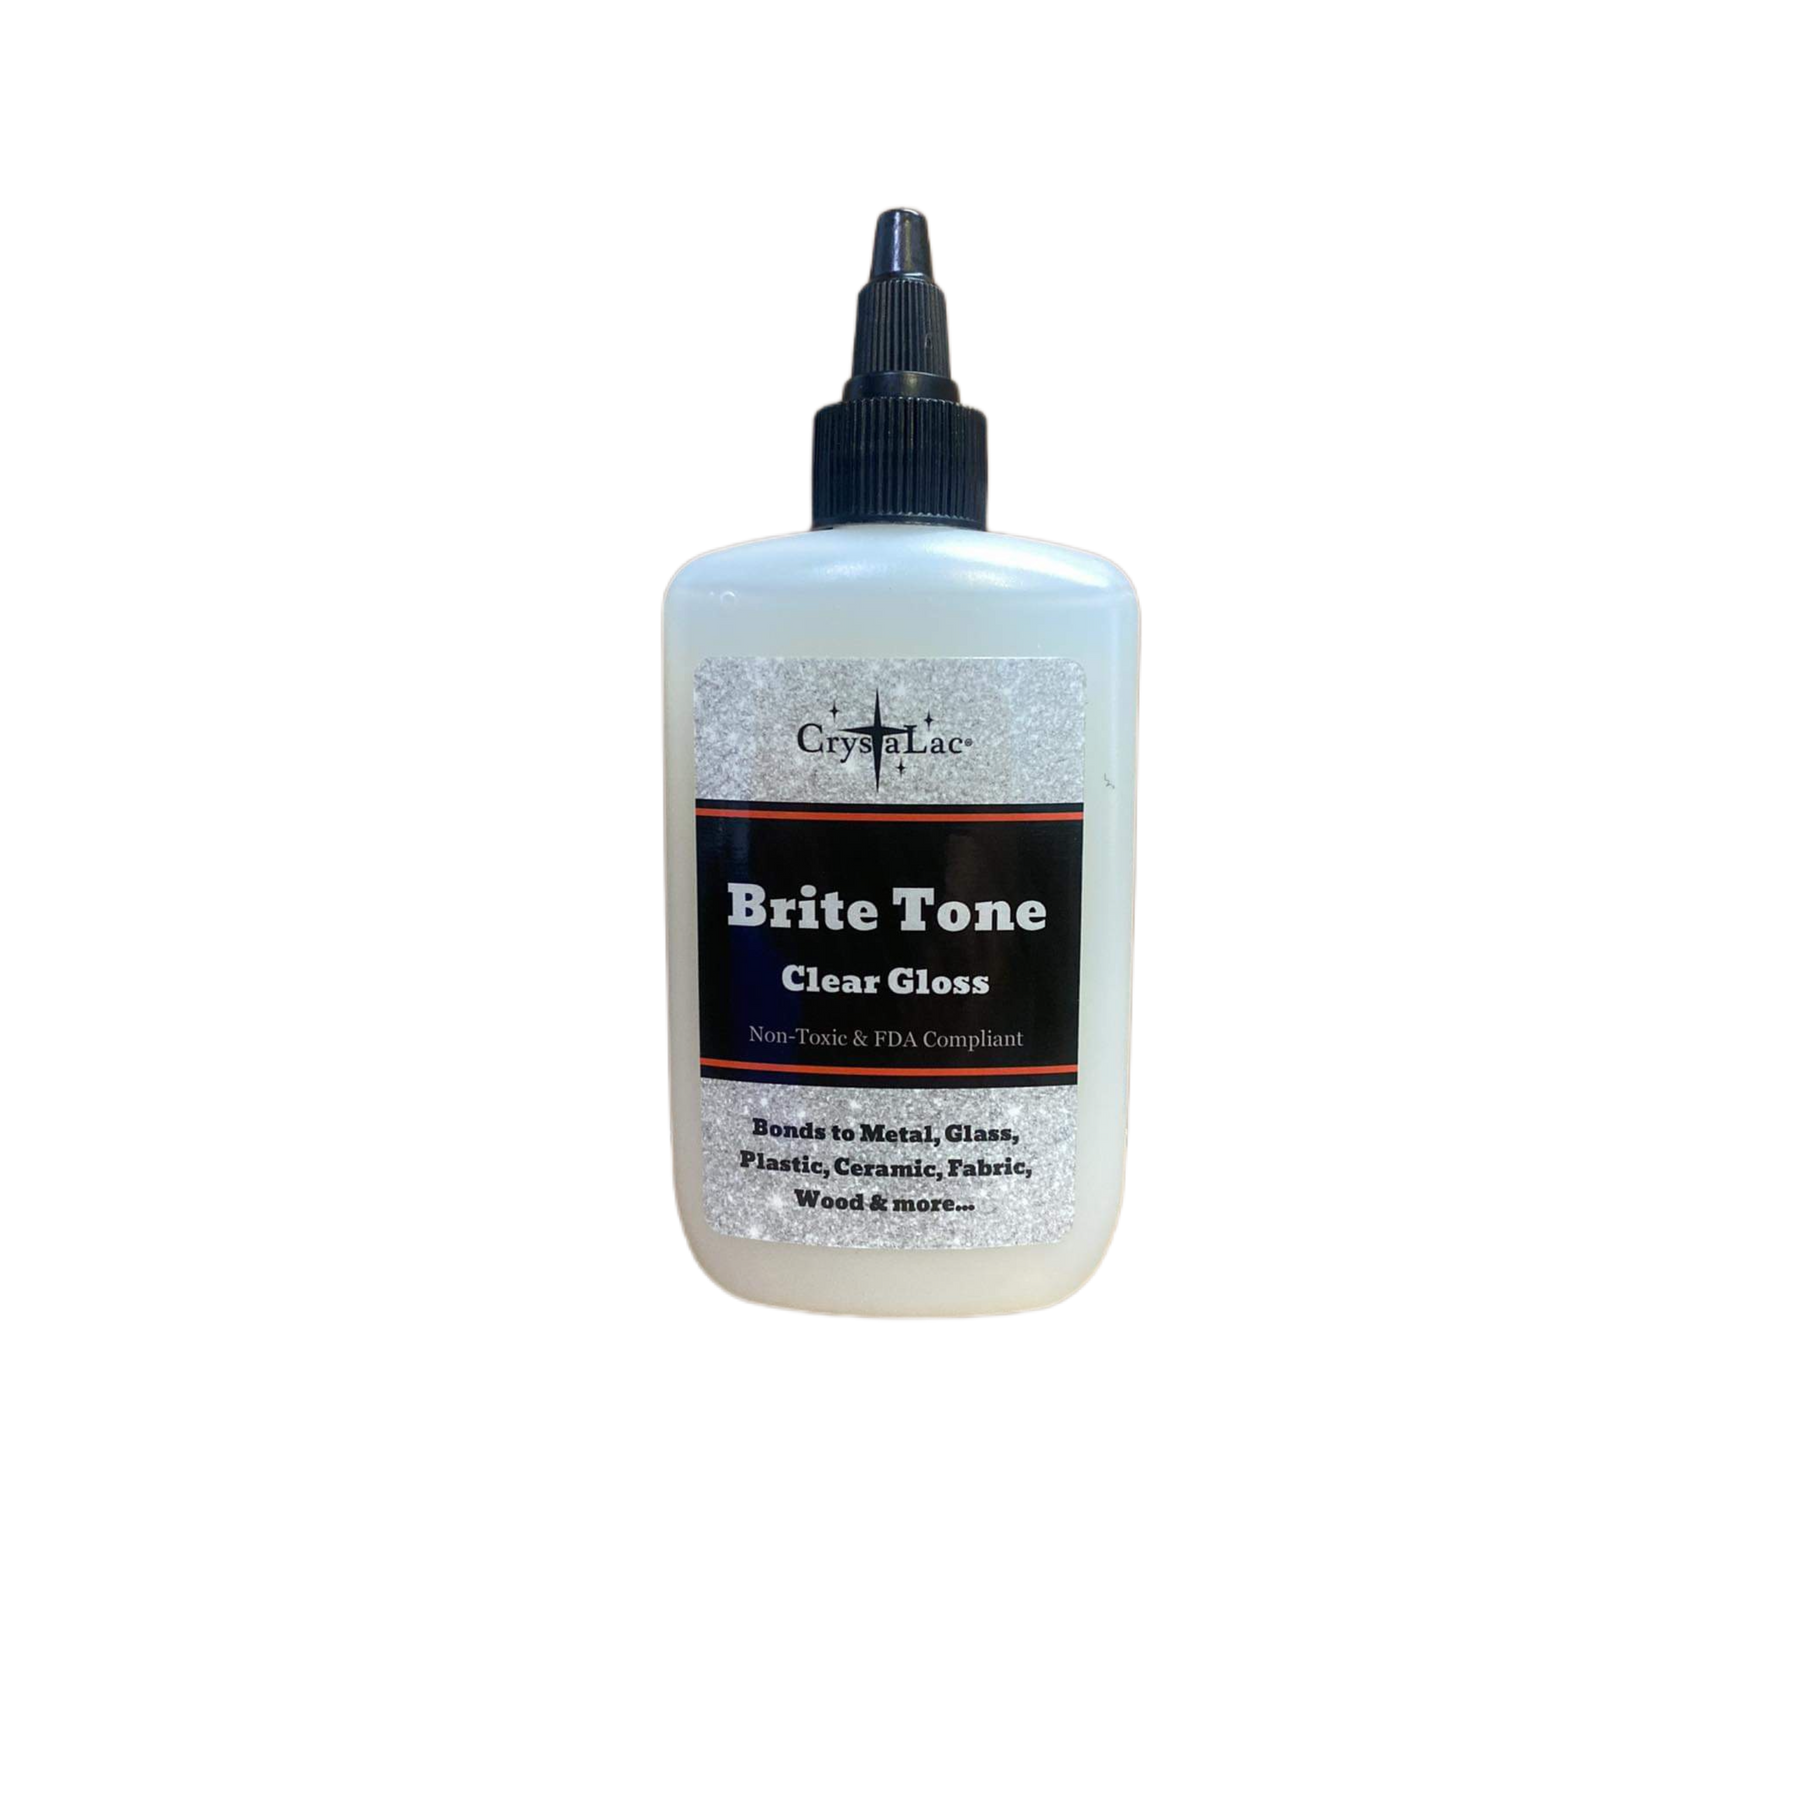 Brite Tone Instrument Finish / High Solids Polyurethane – The